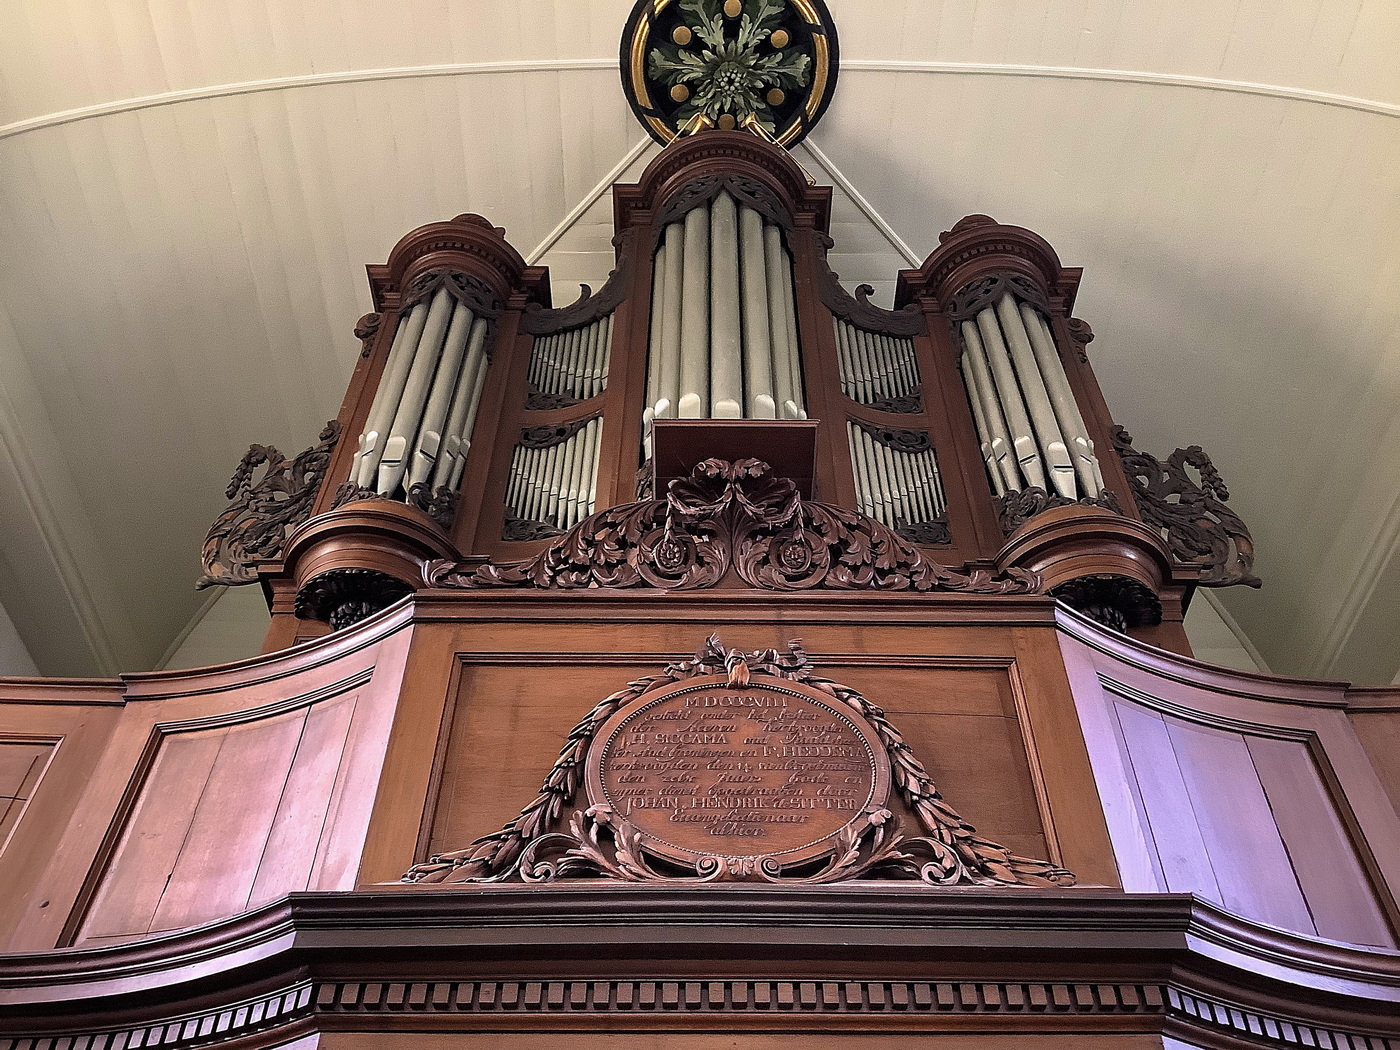 Het orgel in de Nederl. Herv. kerk te Finsterwolde. Foto: ©Jur Kuipers.